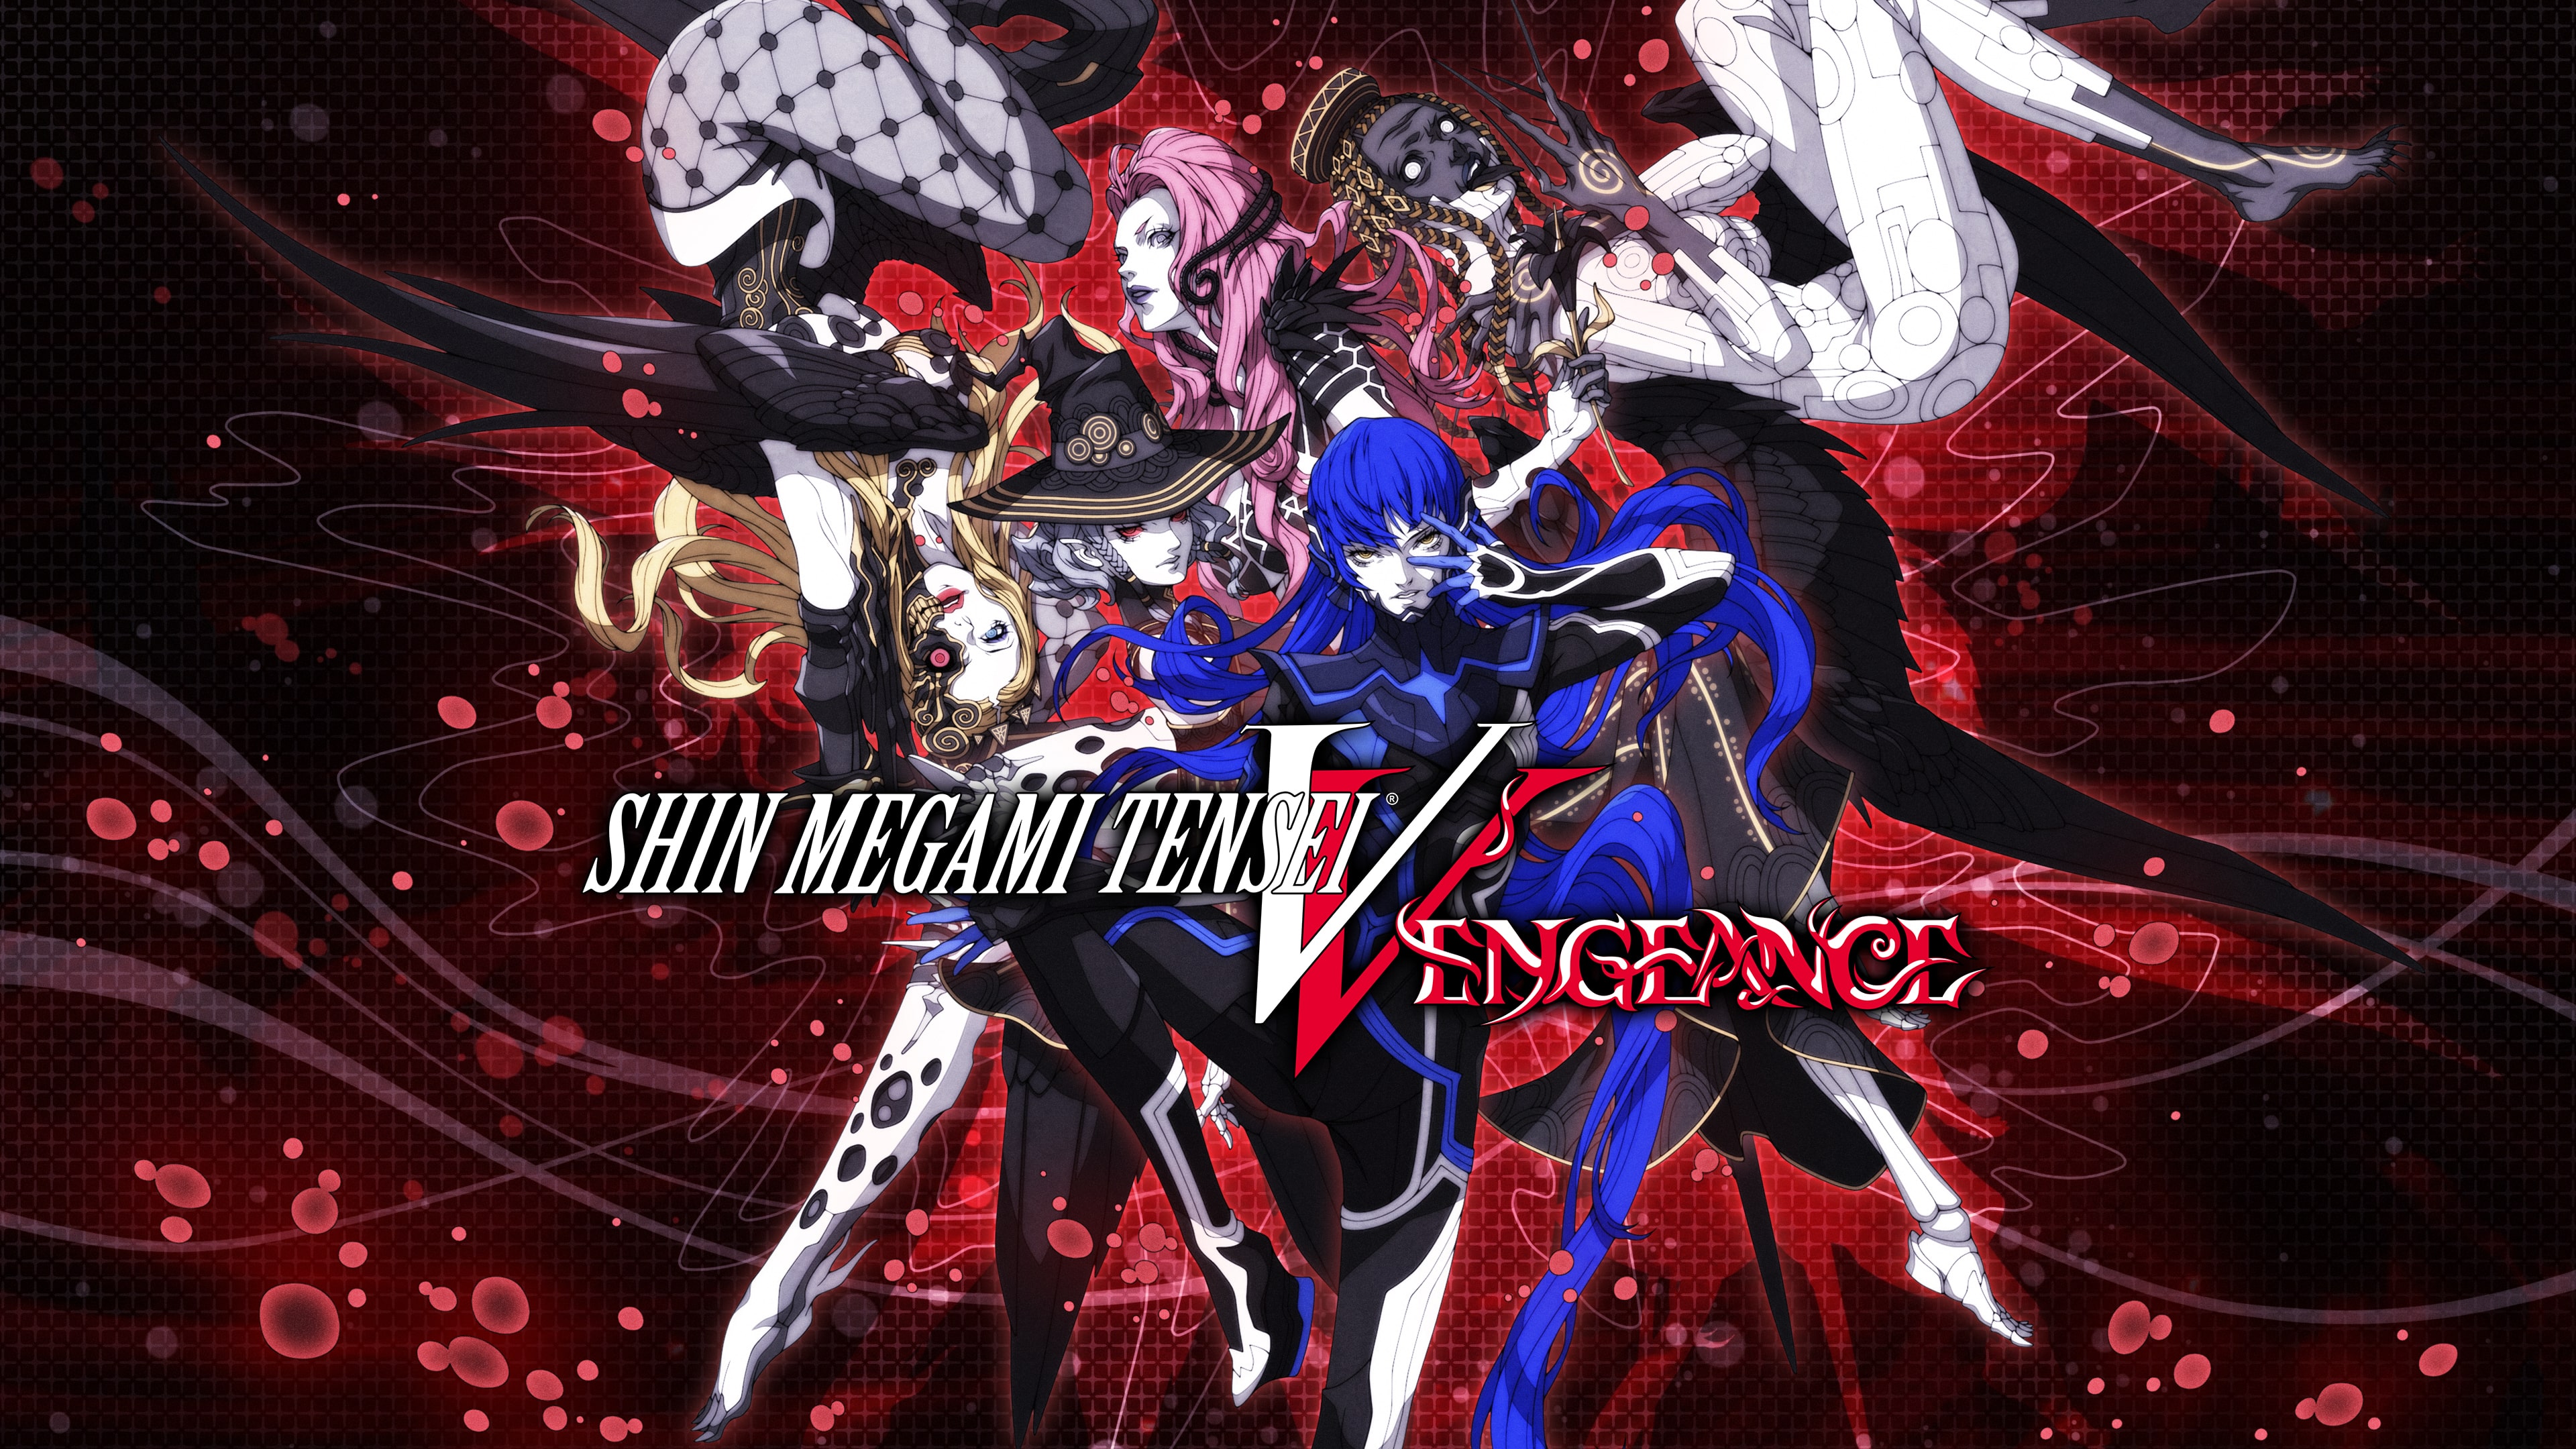 Shin Megami Tensei V: Vengeance (Simplified Chinese, Korean, Traditional Chinese)